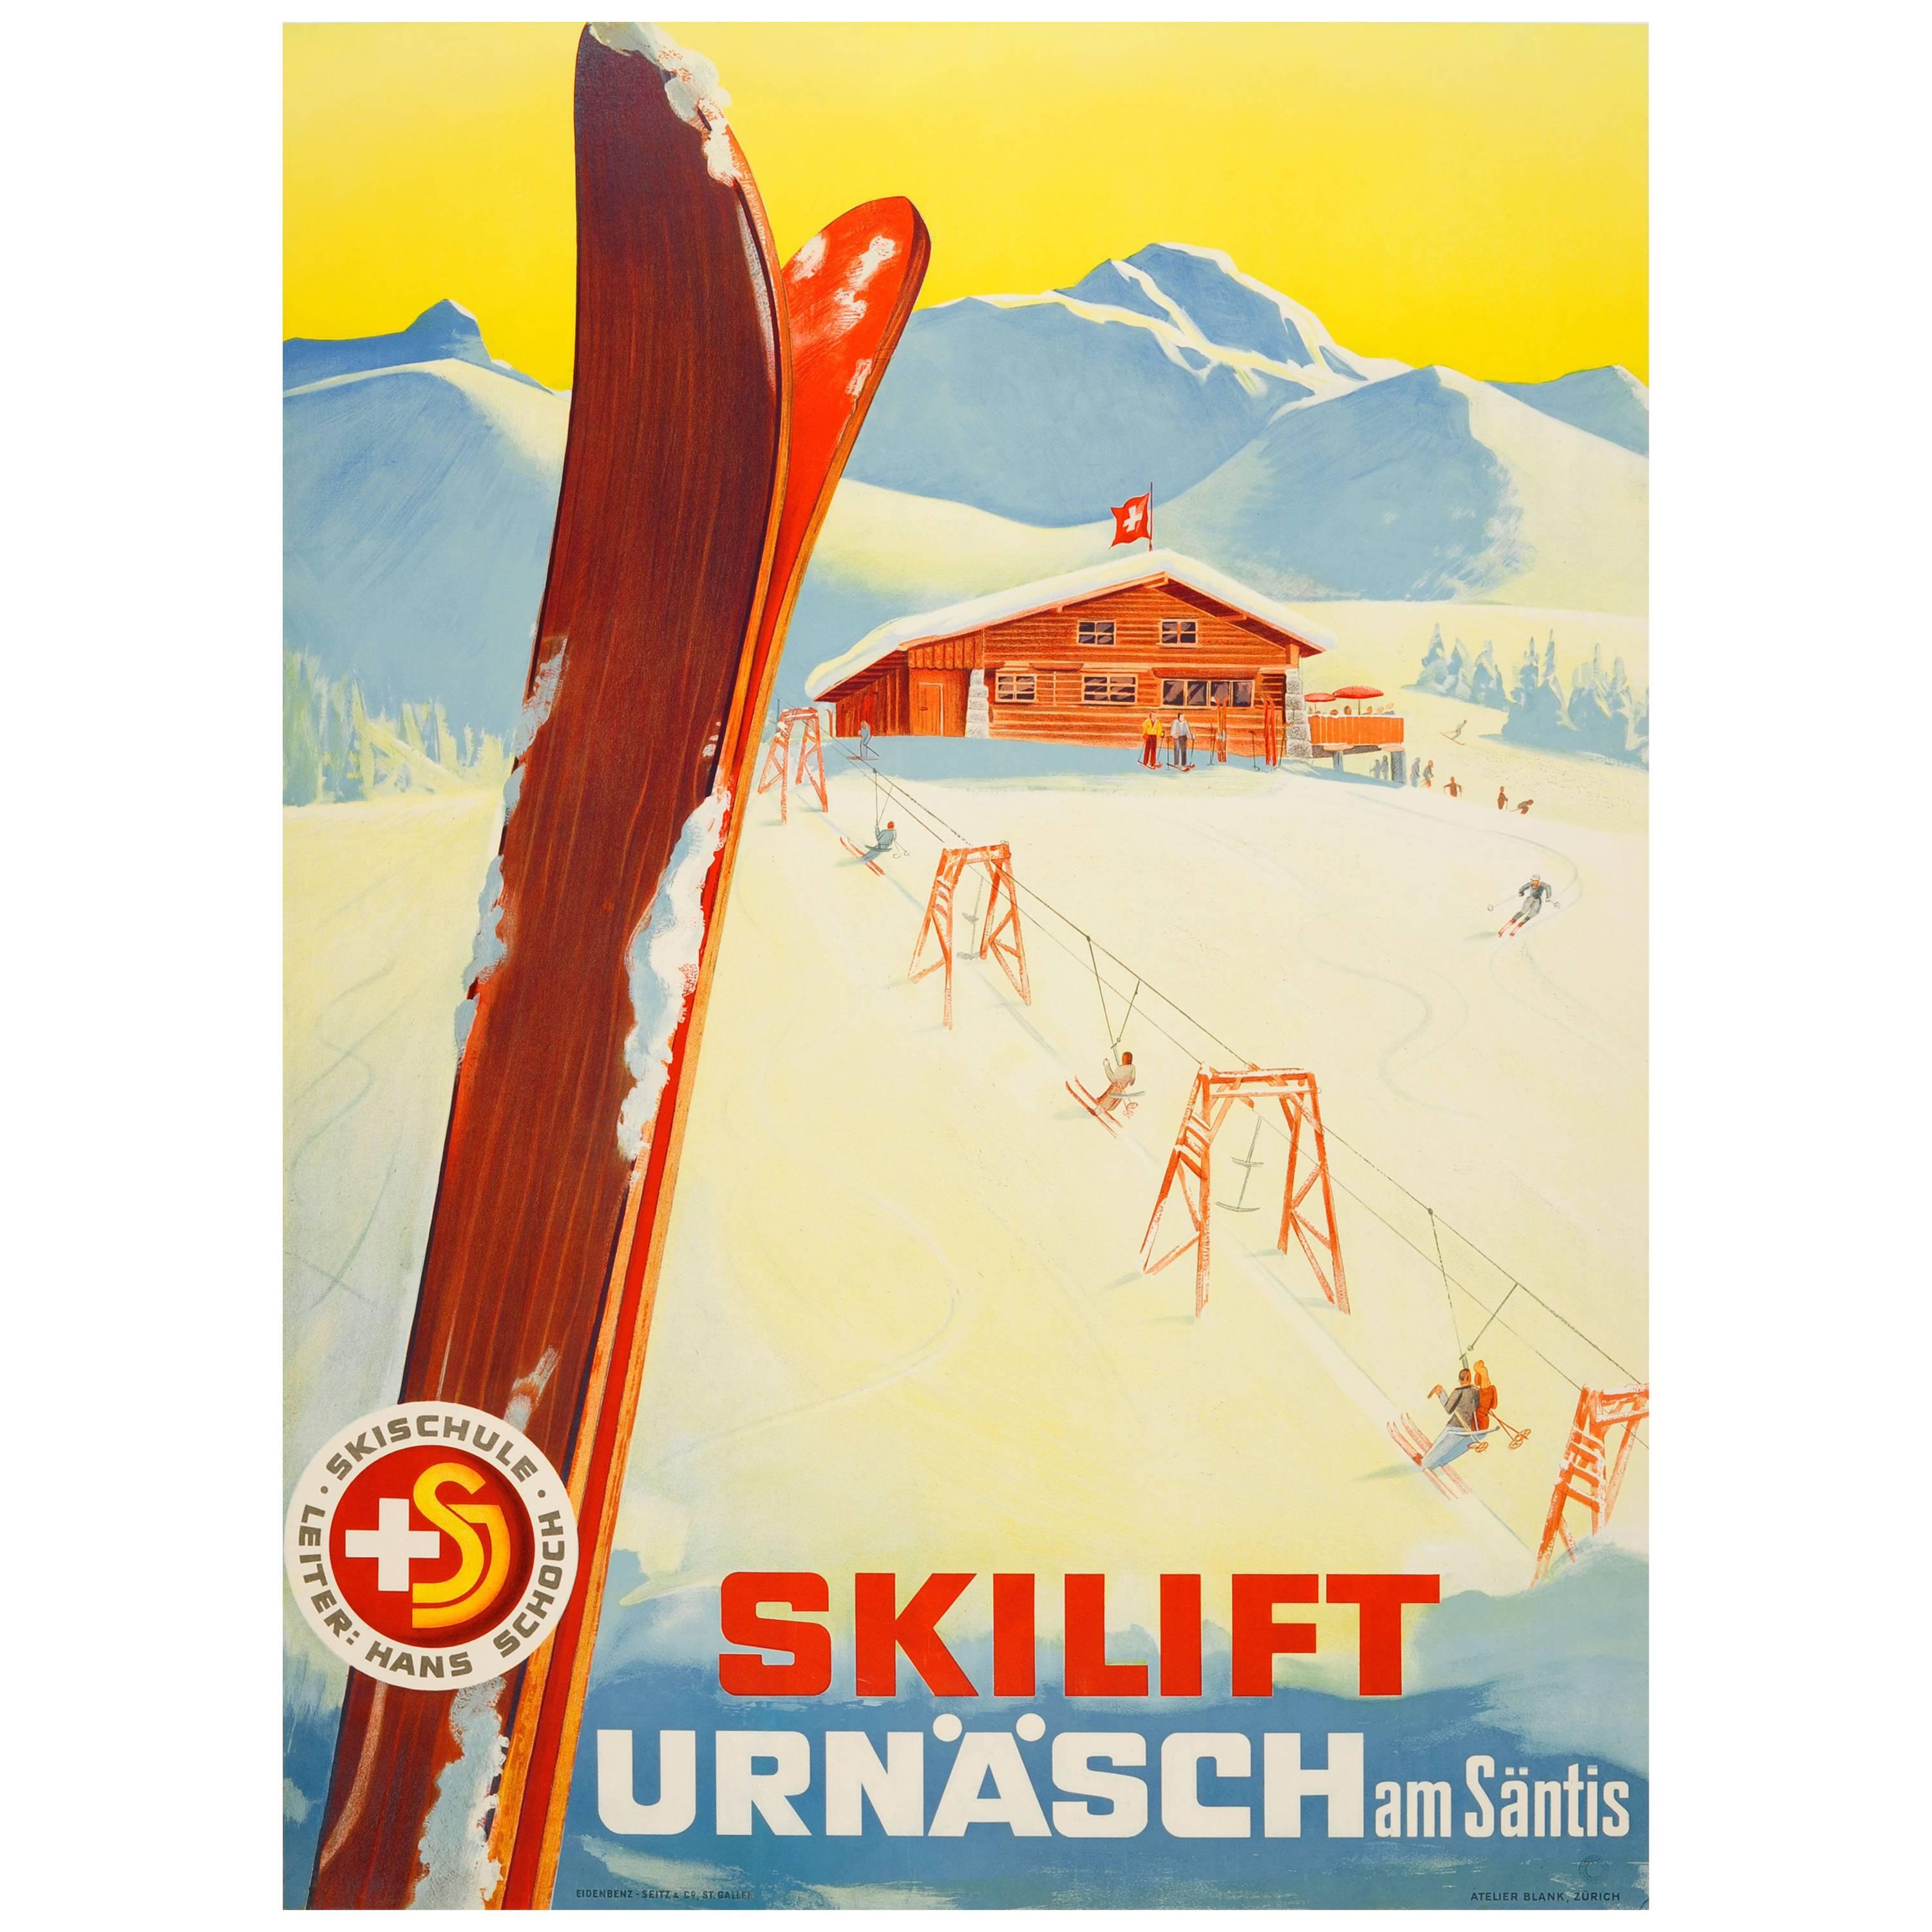 Original Vintage Switzerland Skiing Poster - Skilift Urnash am Santis Skischule